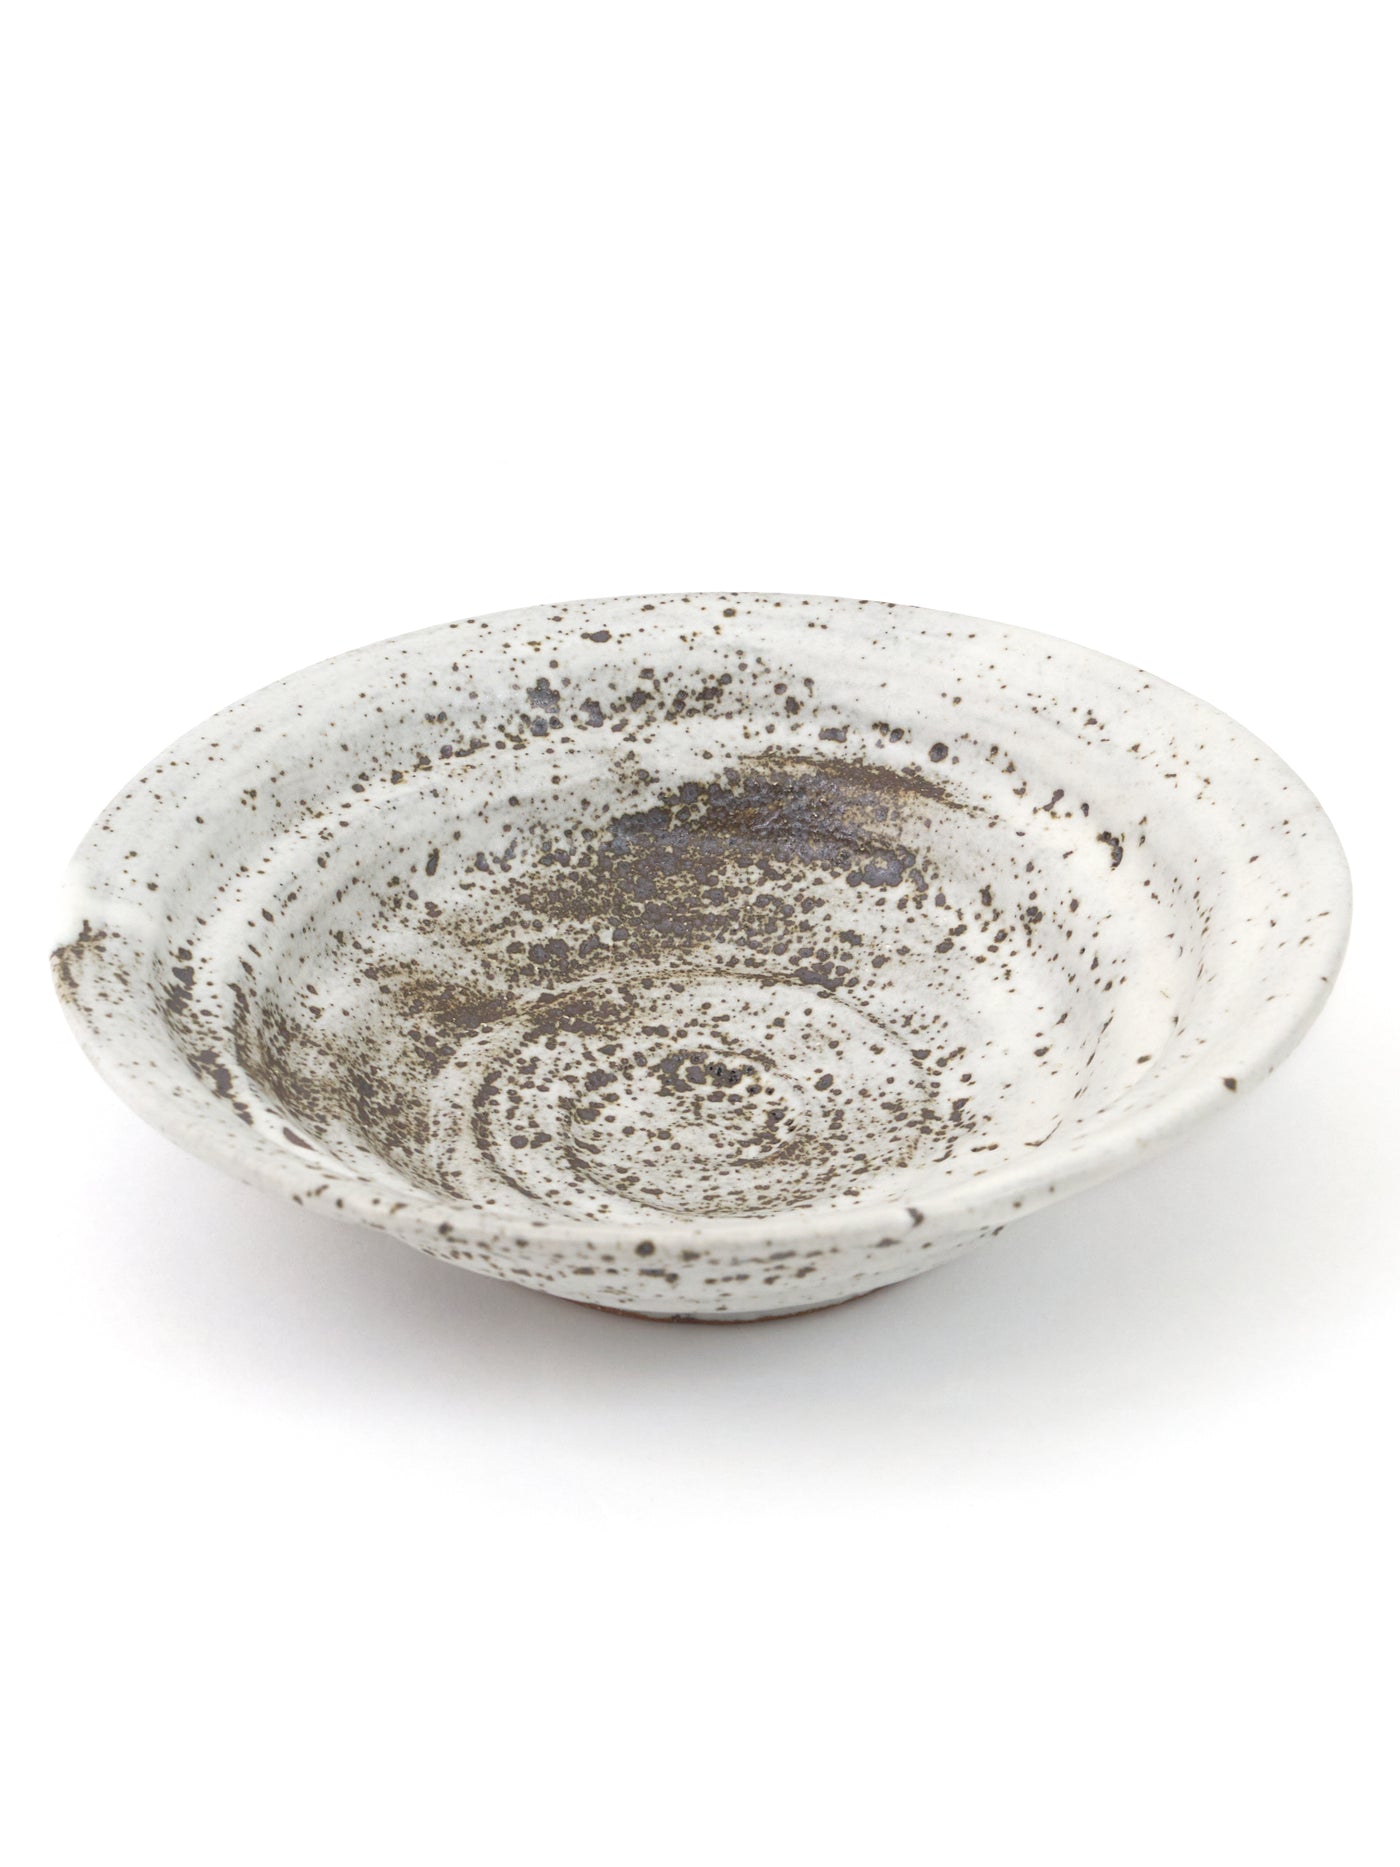 Zui White Kyoto Ware Serving Bowl by Ninshu (8"/21cm)